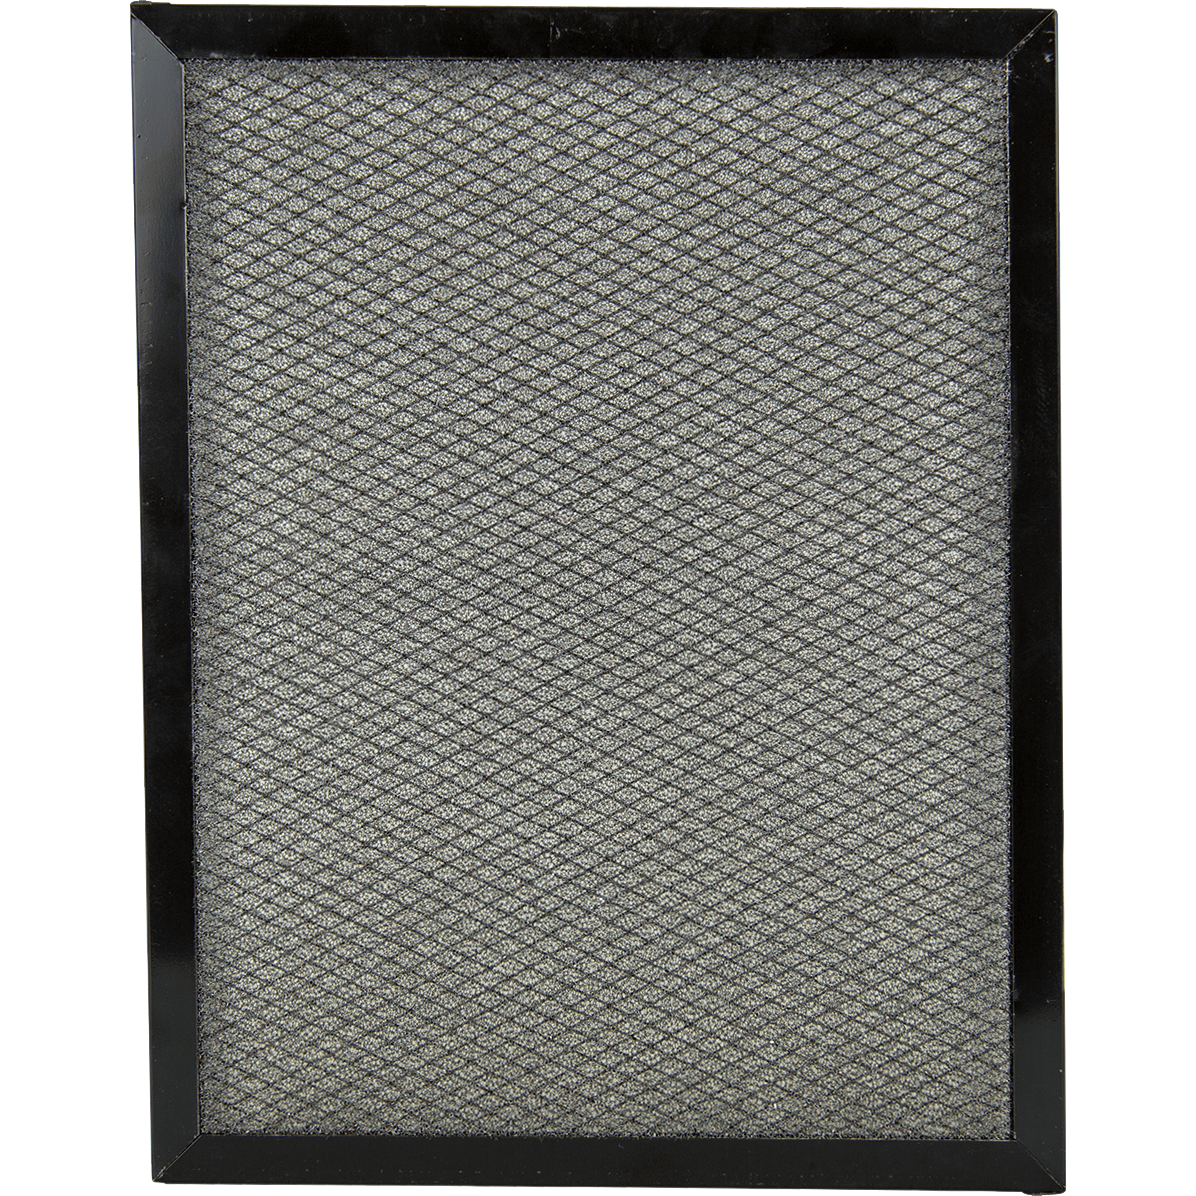 Santa Fe Dehumidifier Pre-filter (9 x 11 x 0.25) 1-PACK